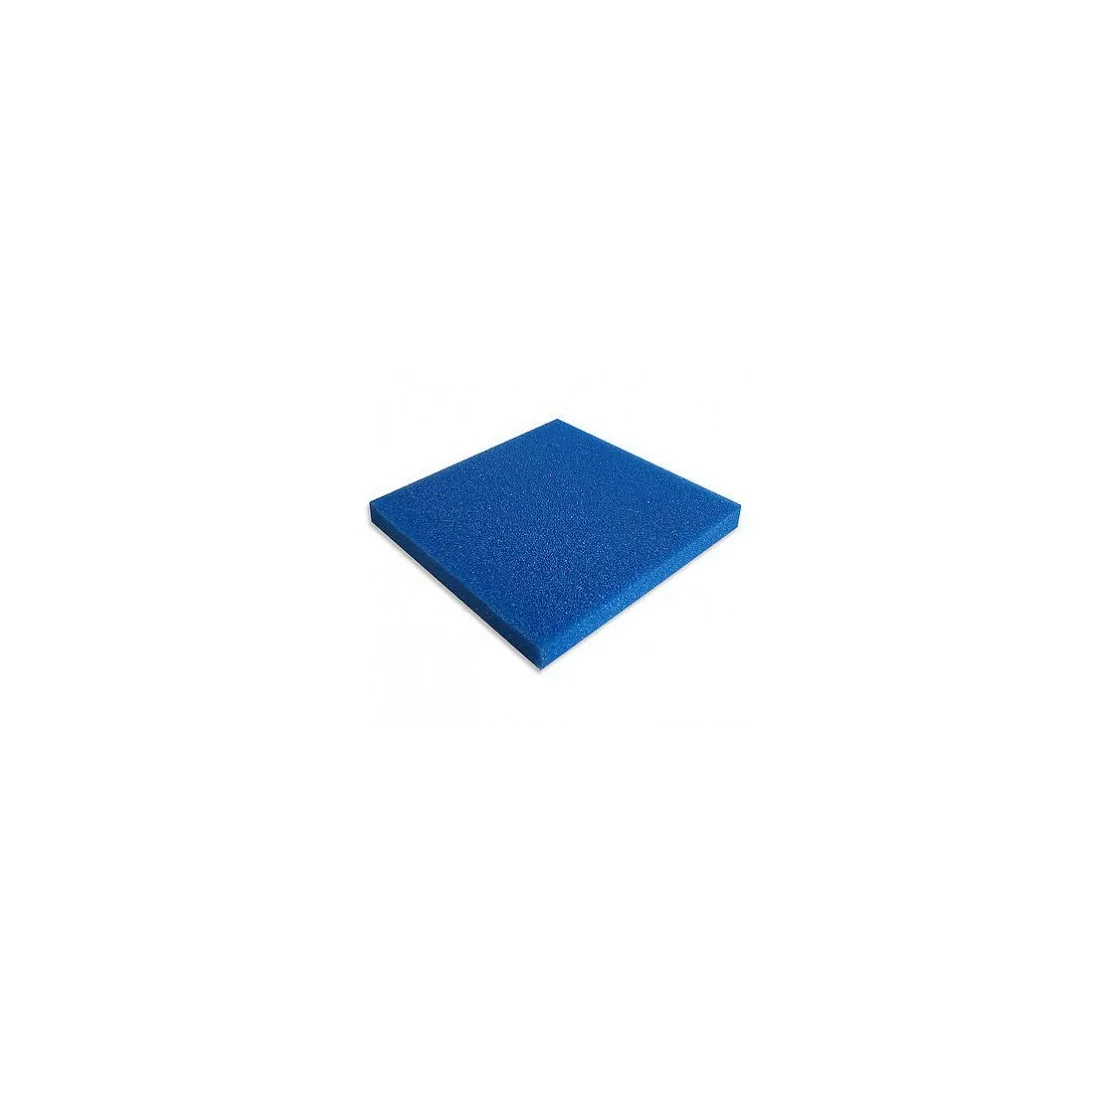 JBL Blue mesh filter foam 50-50-5cm